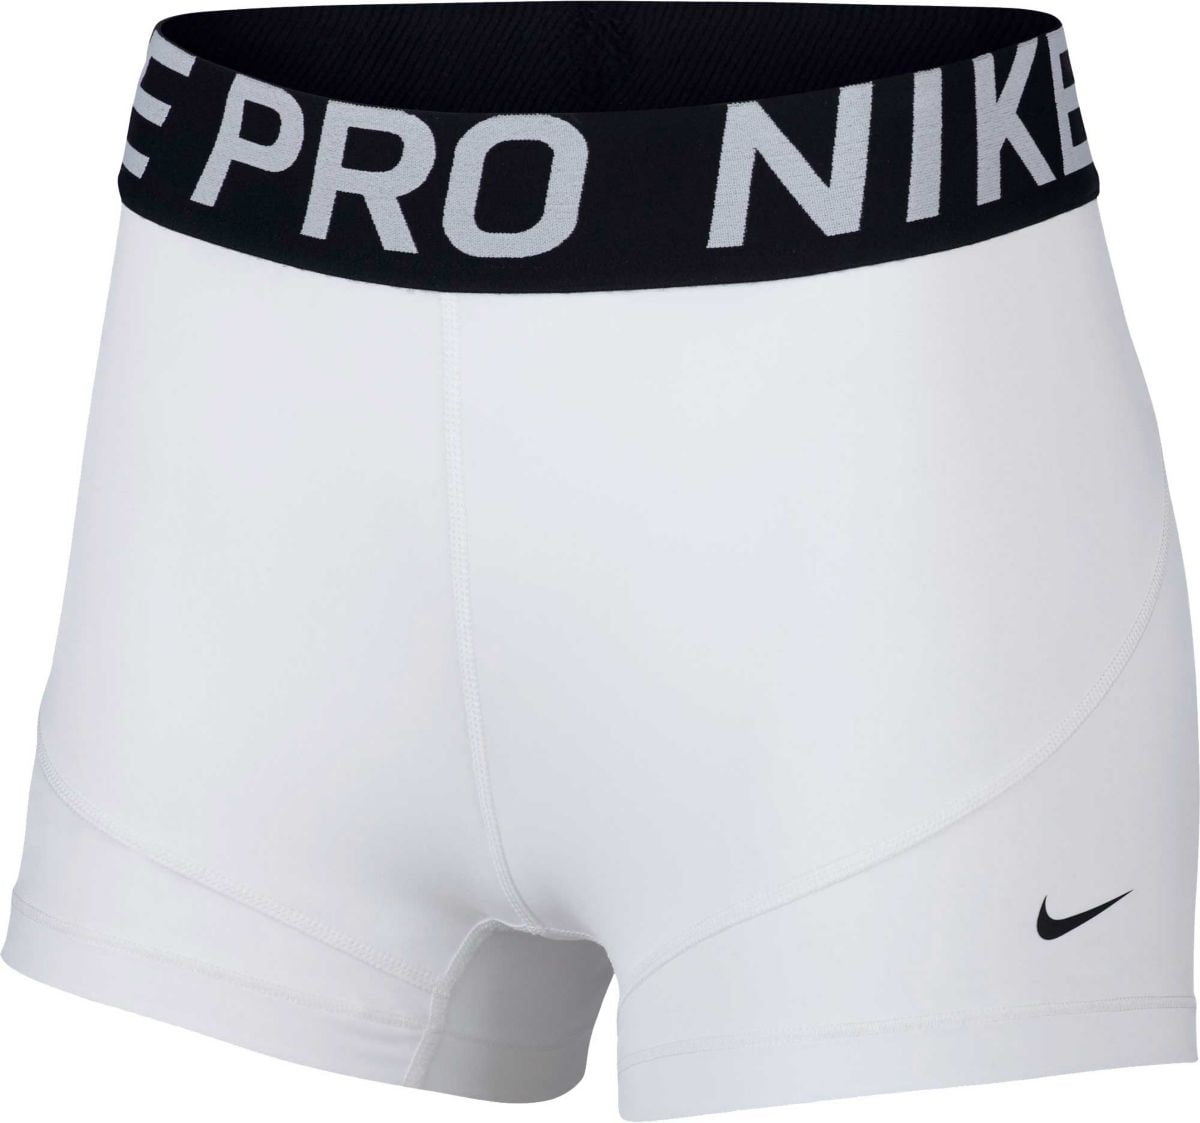 Nike Women's Pro 3" Training Short (White/Black/Black, Medium) Walmart.com